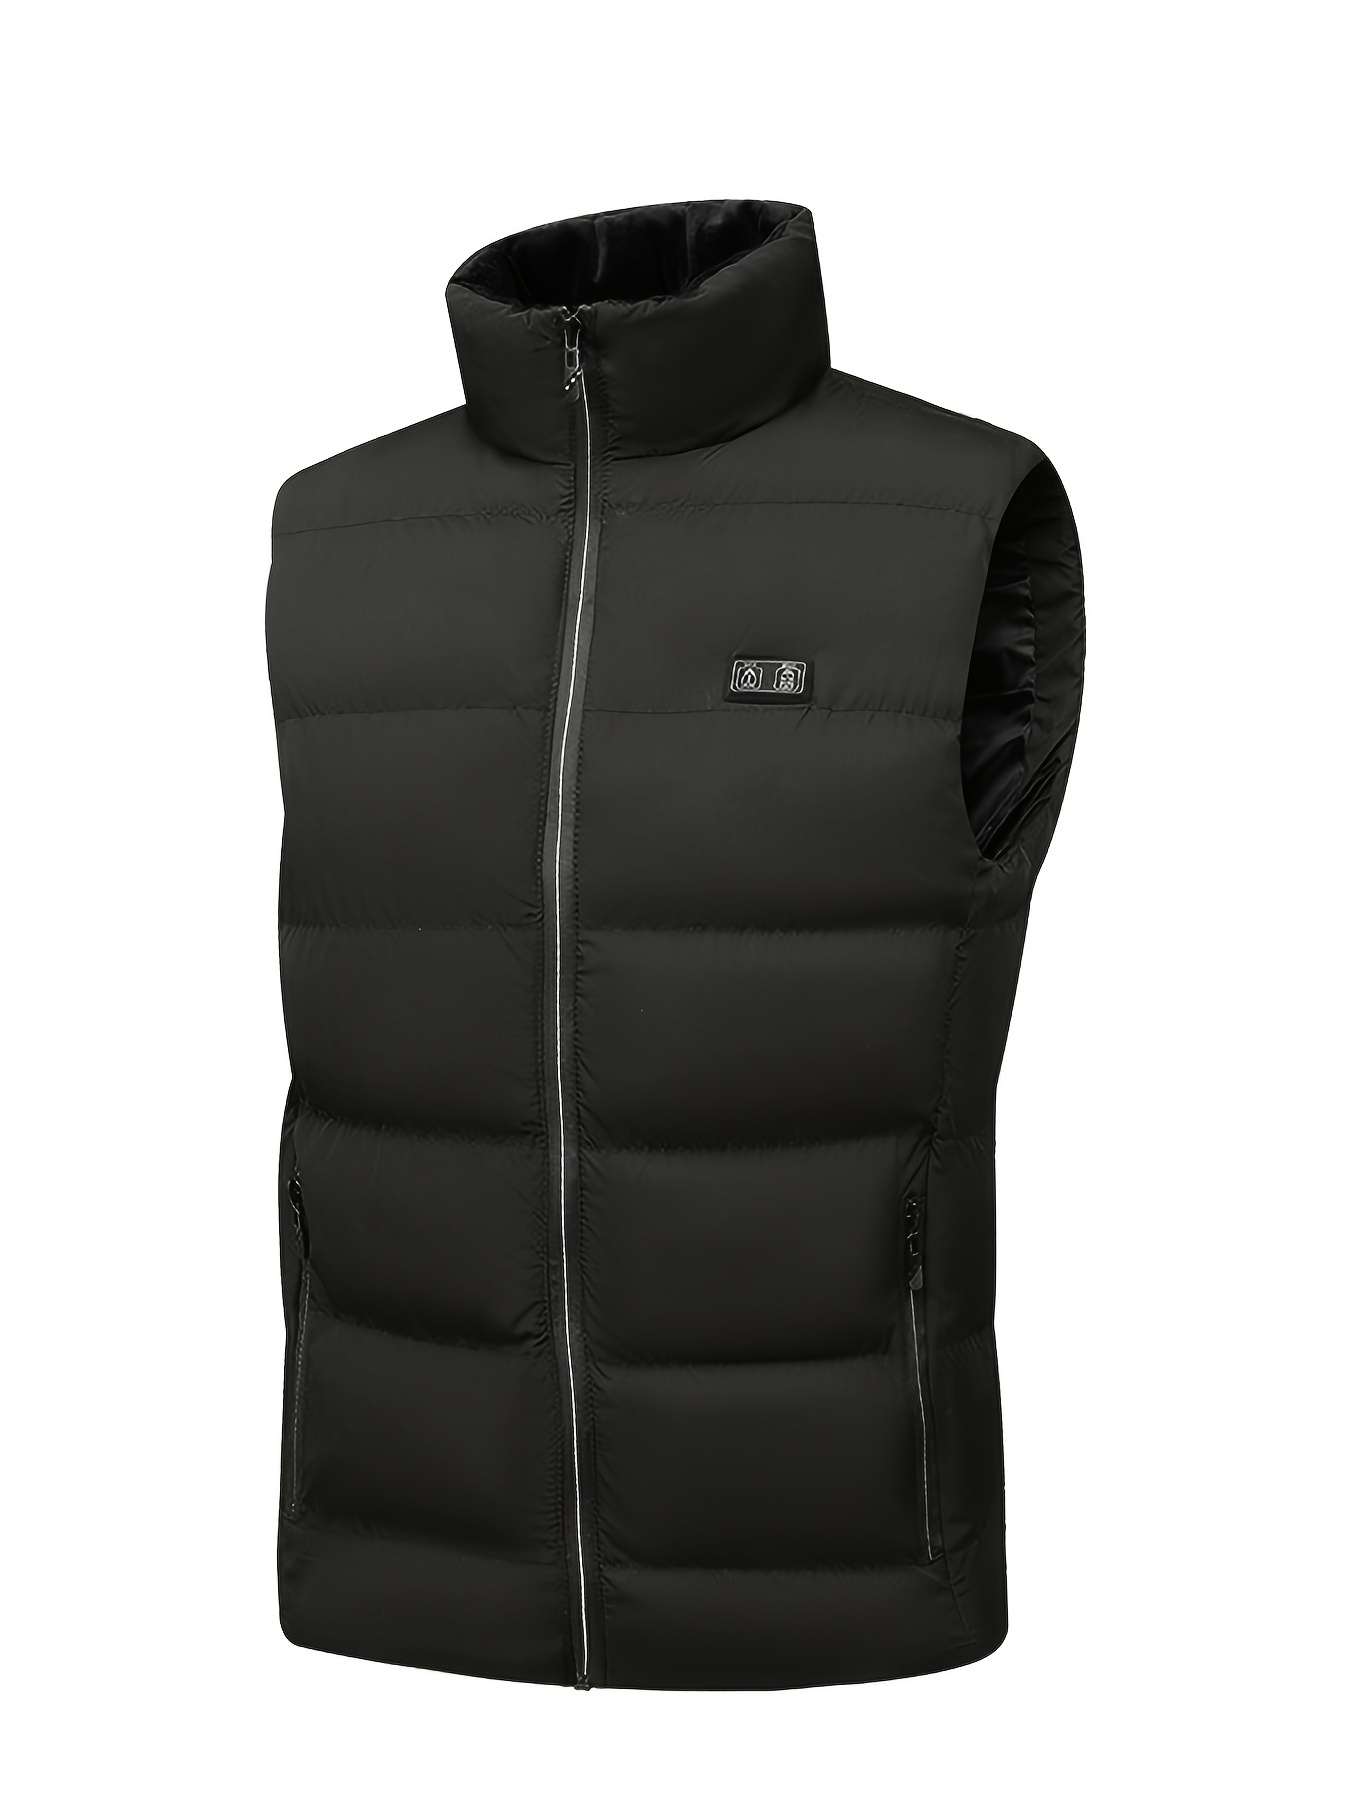 skpabo Heated Vest for Men Heated Jacket Heated Clothing Winter